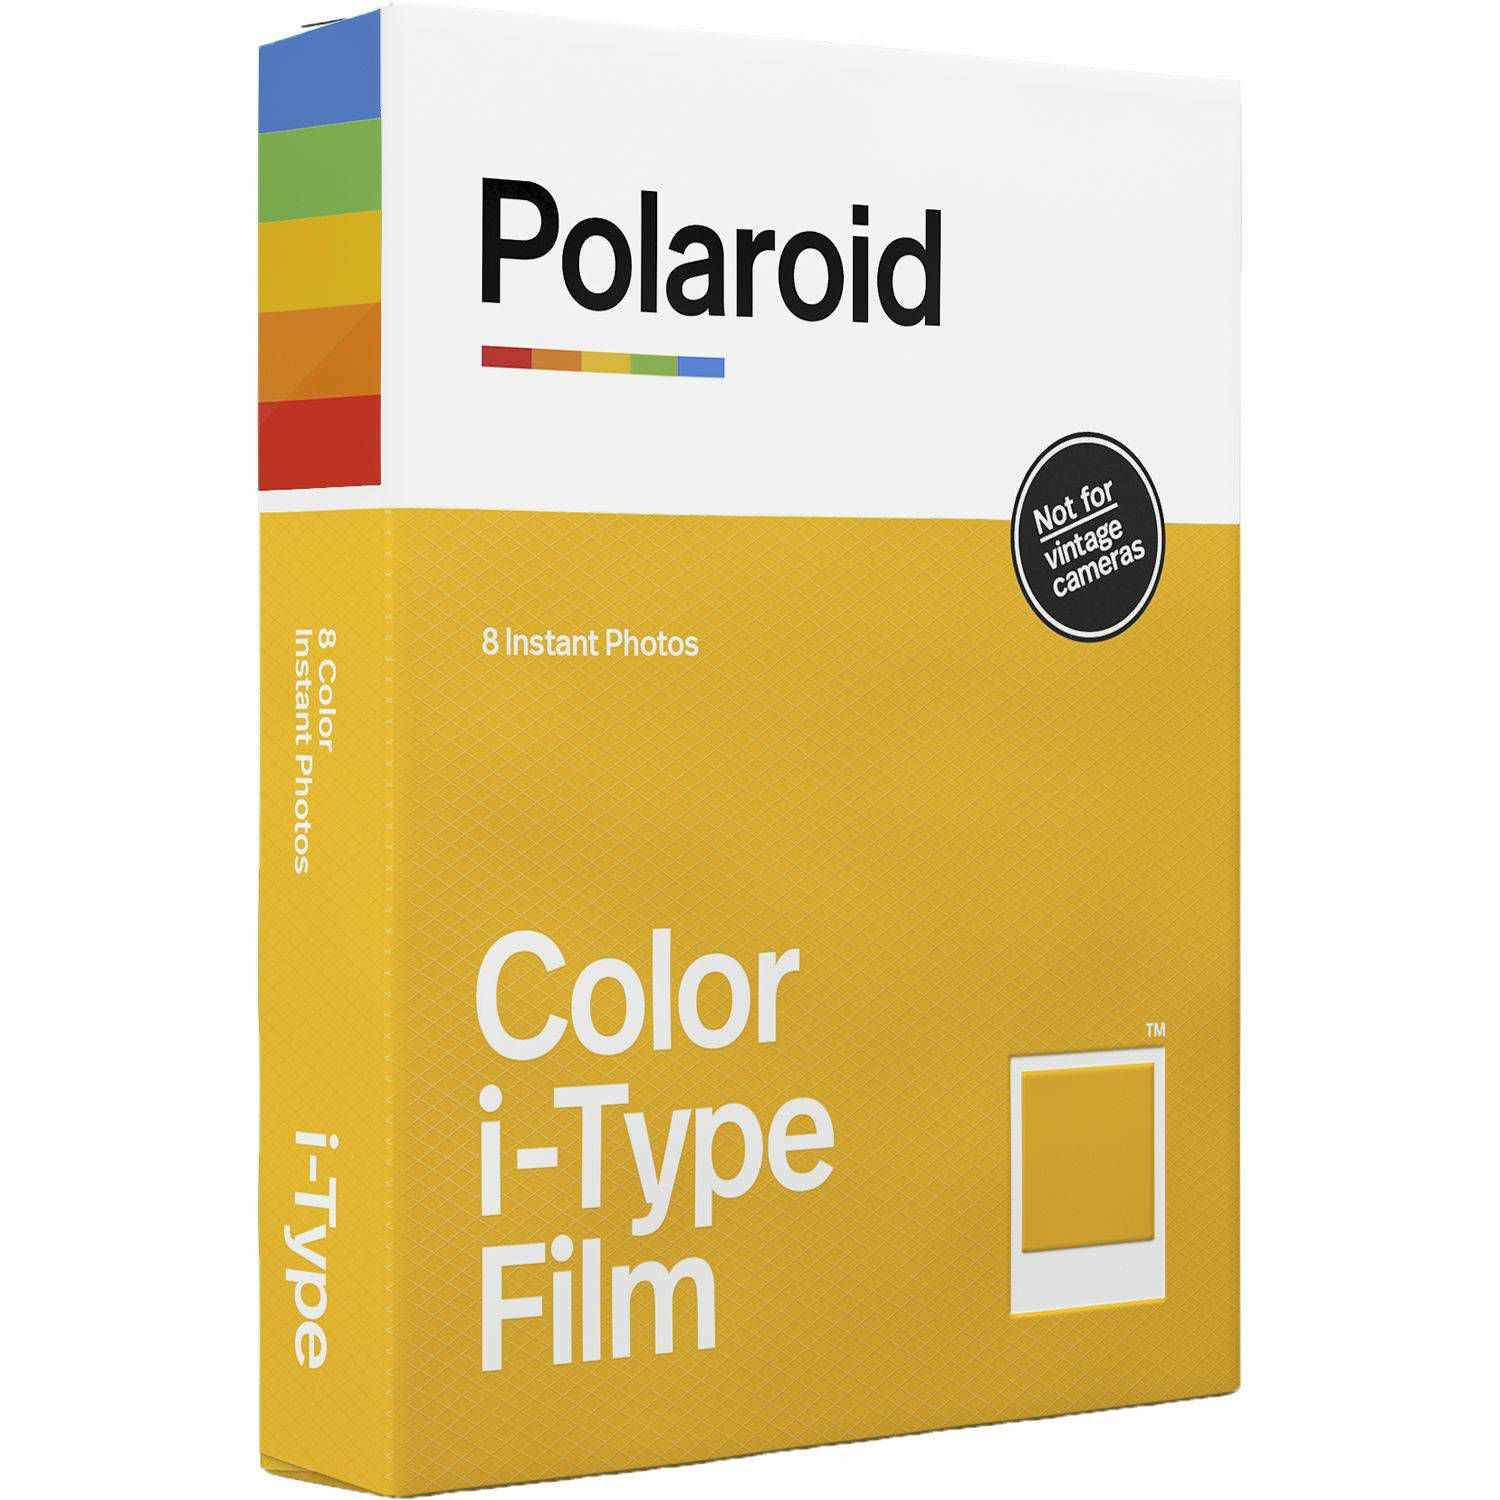 Polaroid Originals Color Film for i-type Cameras (batteryless) papir za fotografije u boji za Instant fotoaparate (006000)